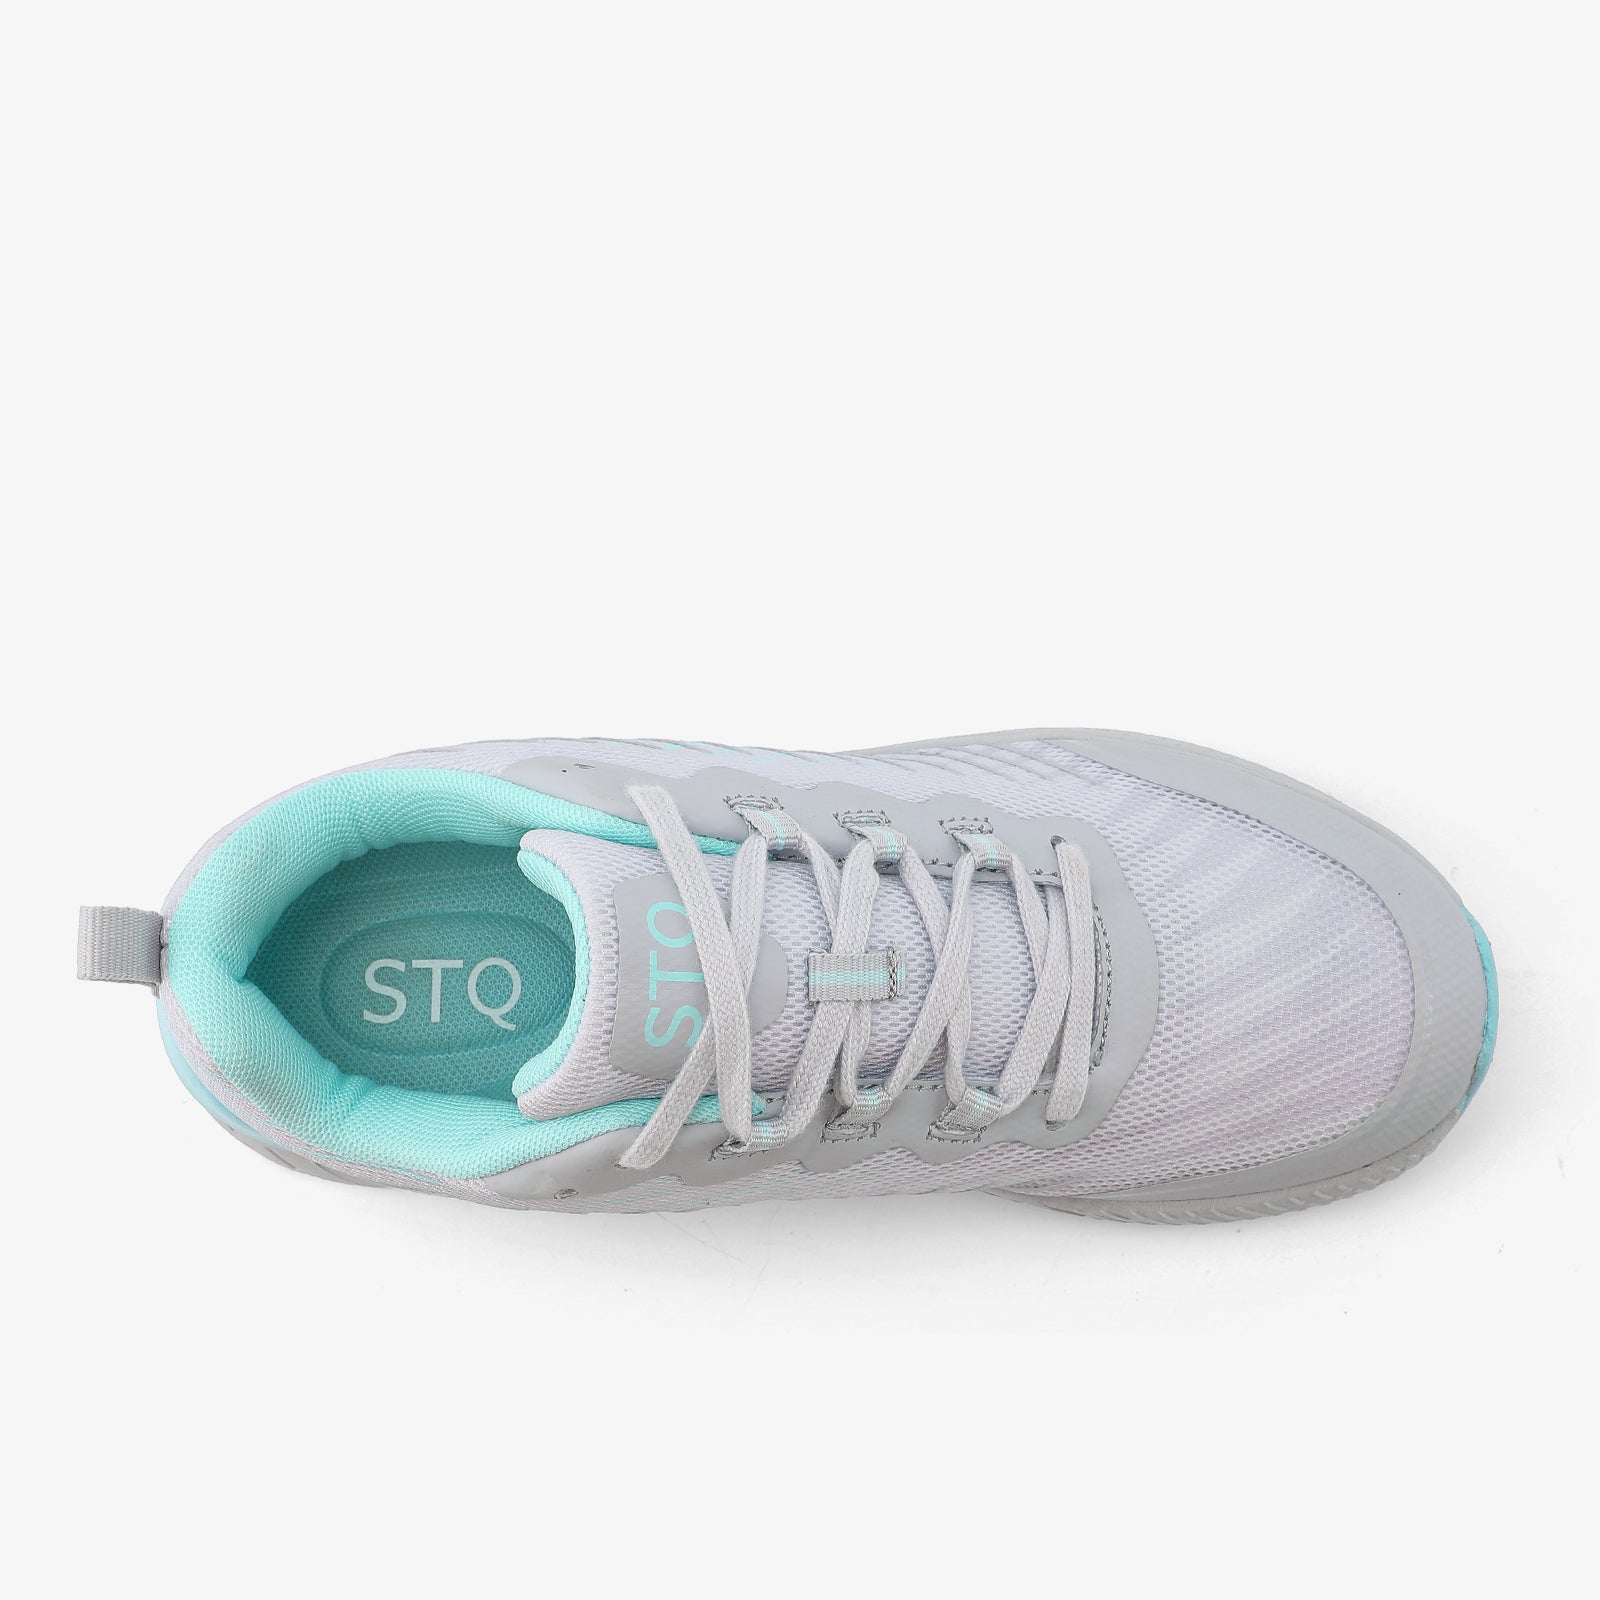 stq-shoes-fashion-sneakers-grey-teal-view